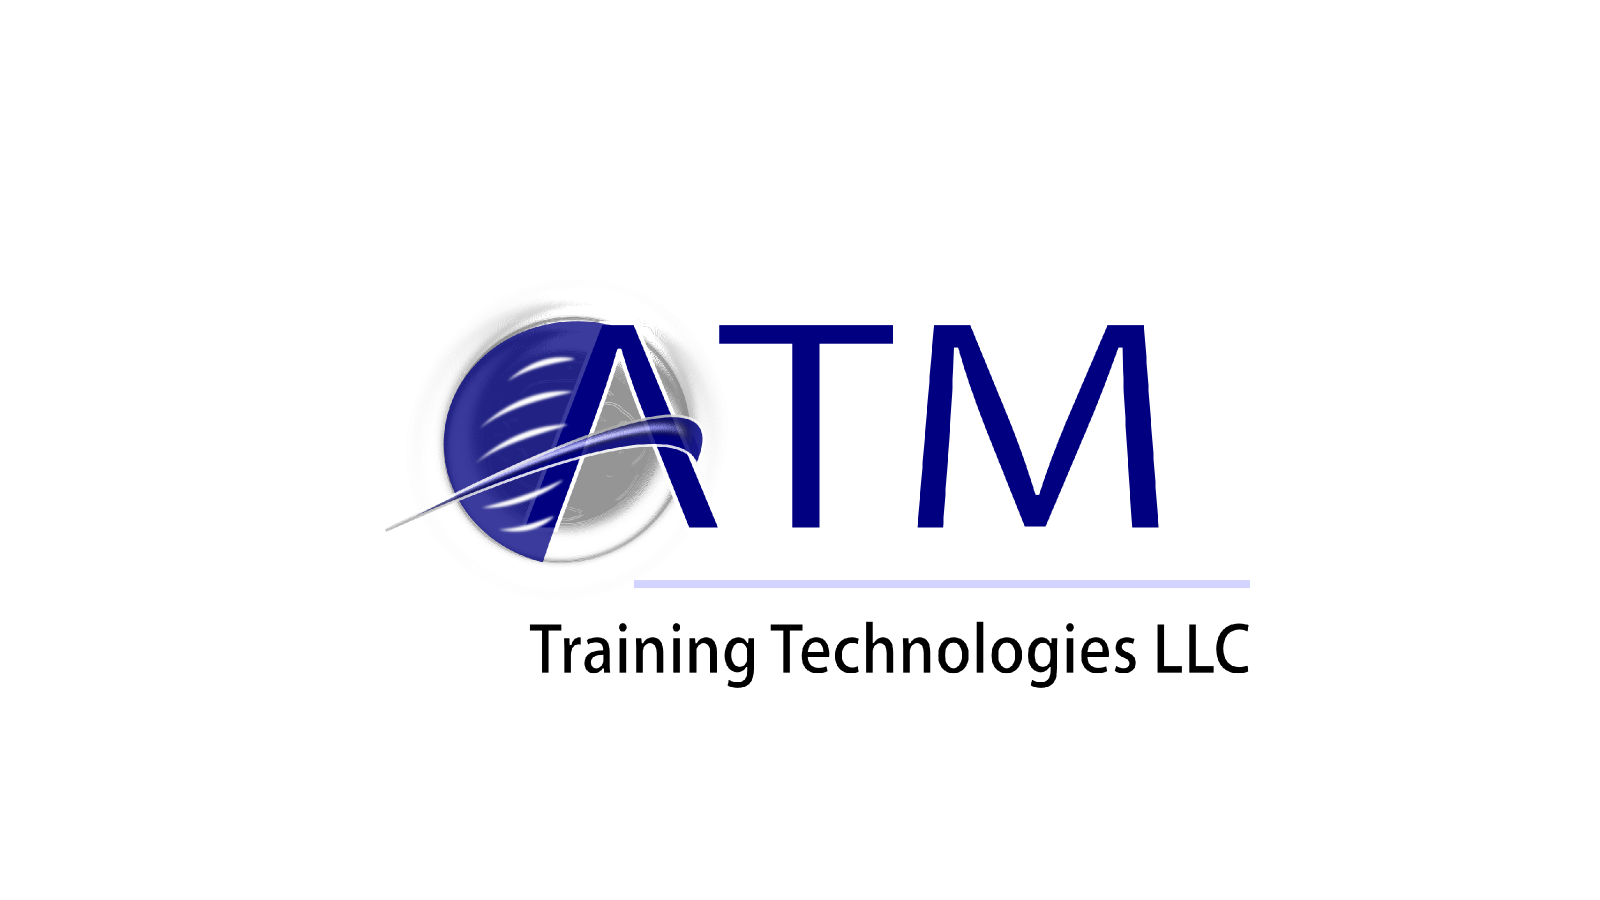 ATM Training Technologies Logo Sample.png